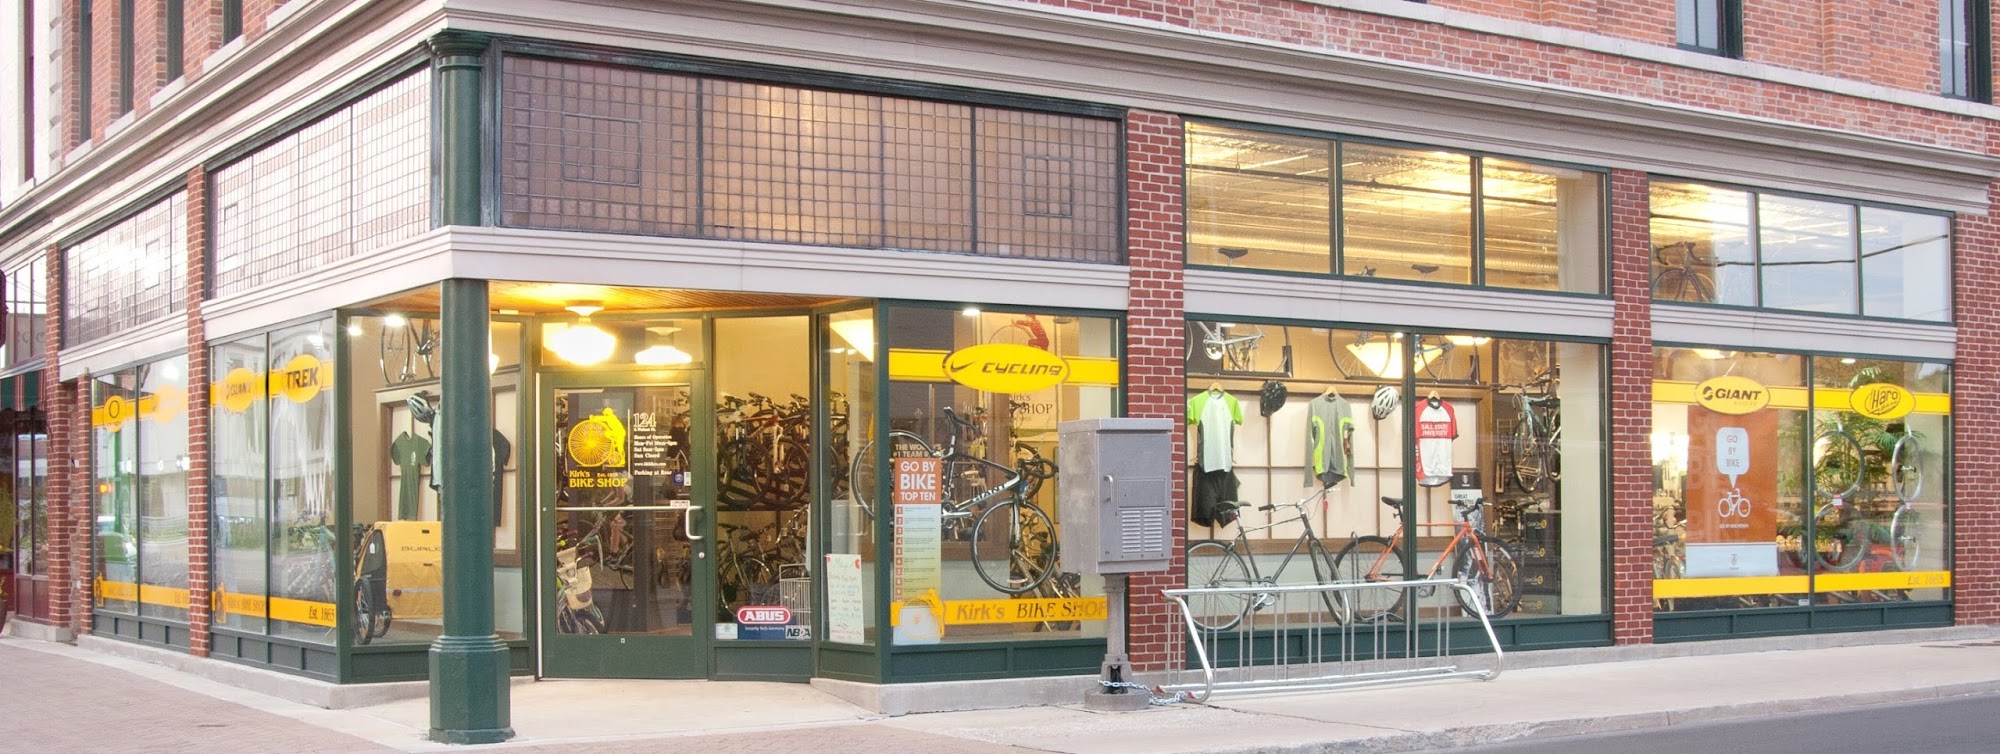 Kirk's Bike Shop